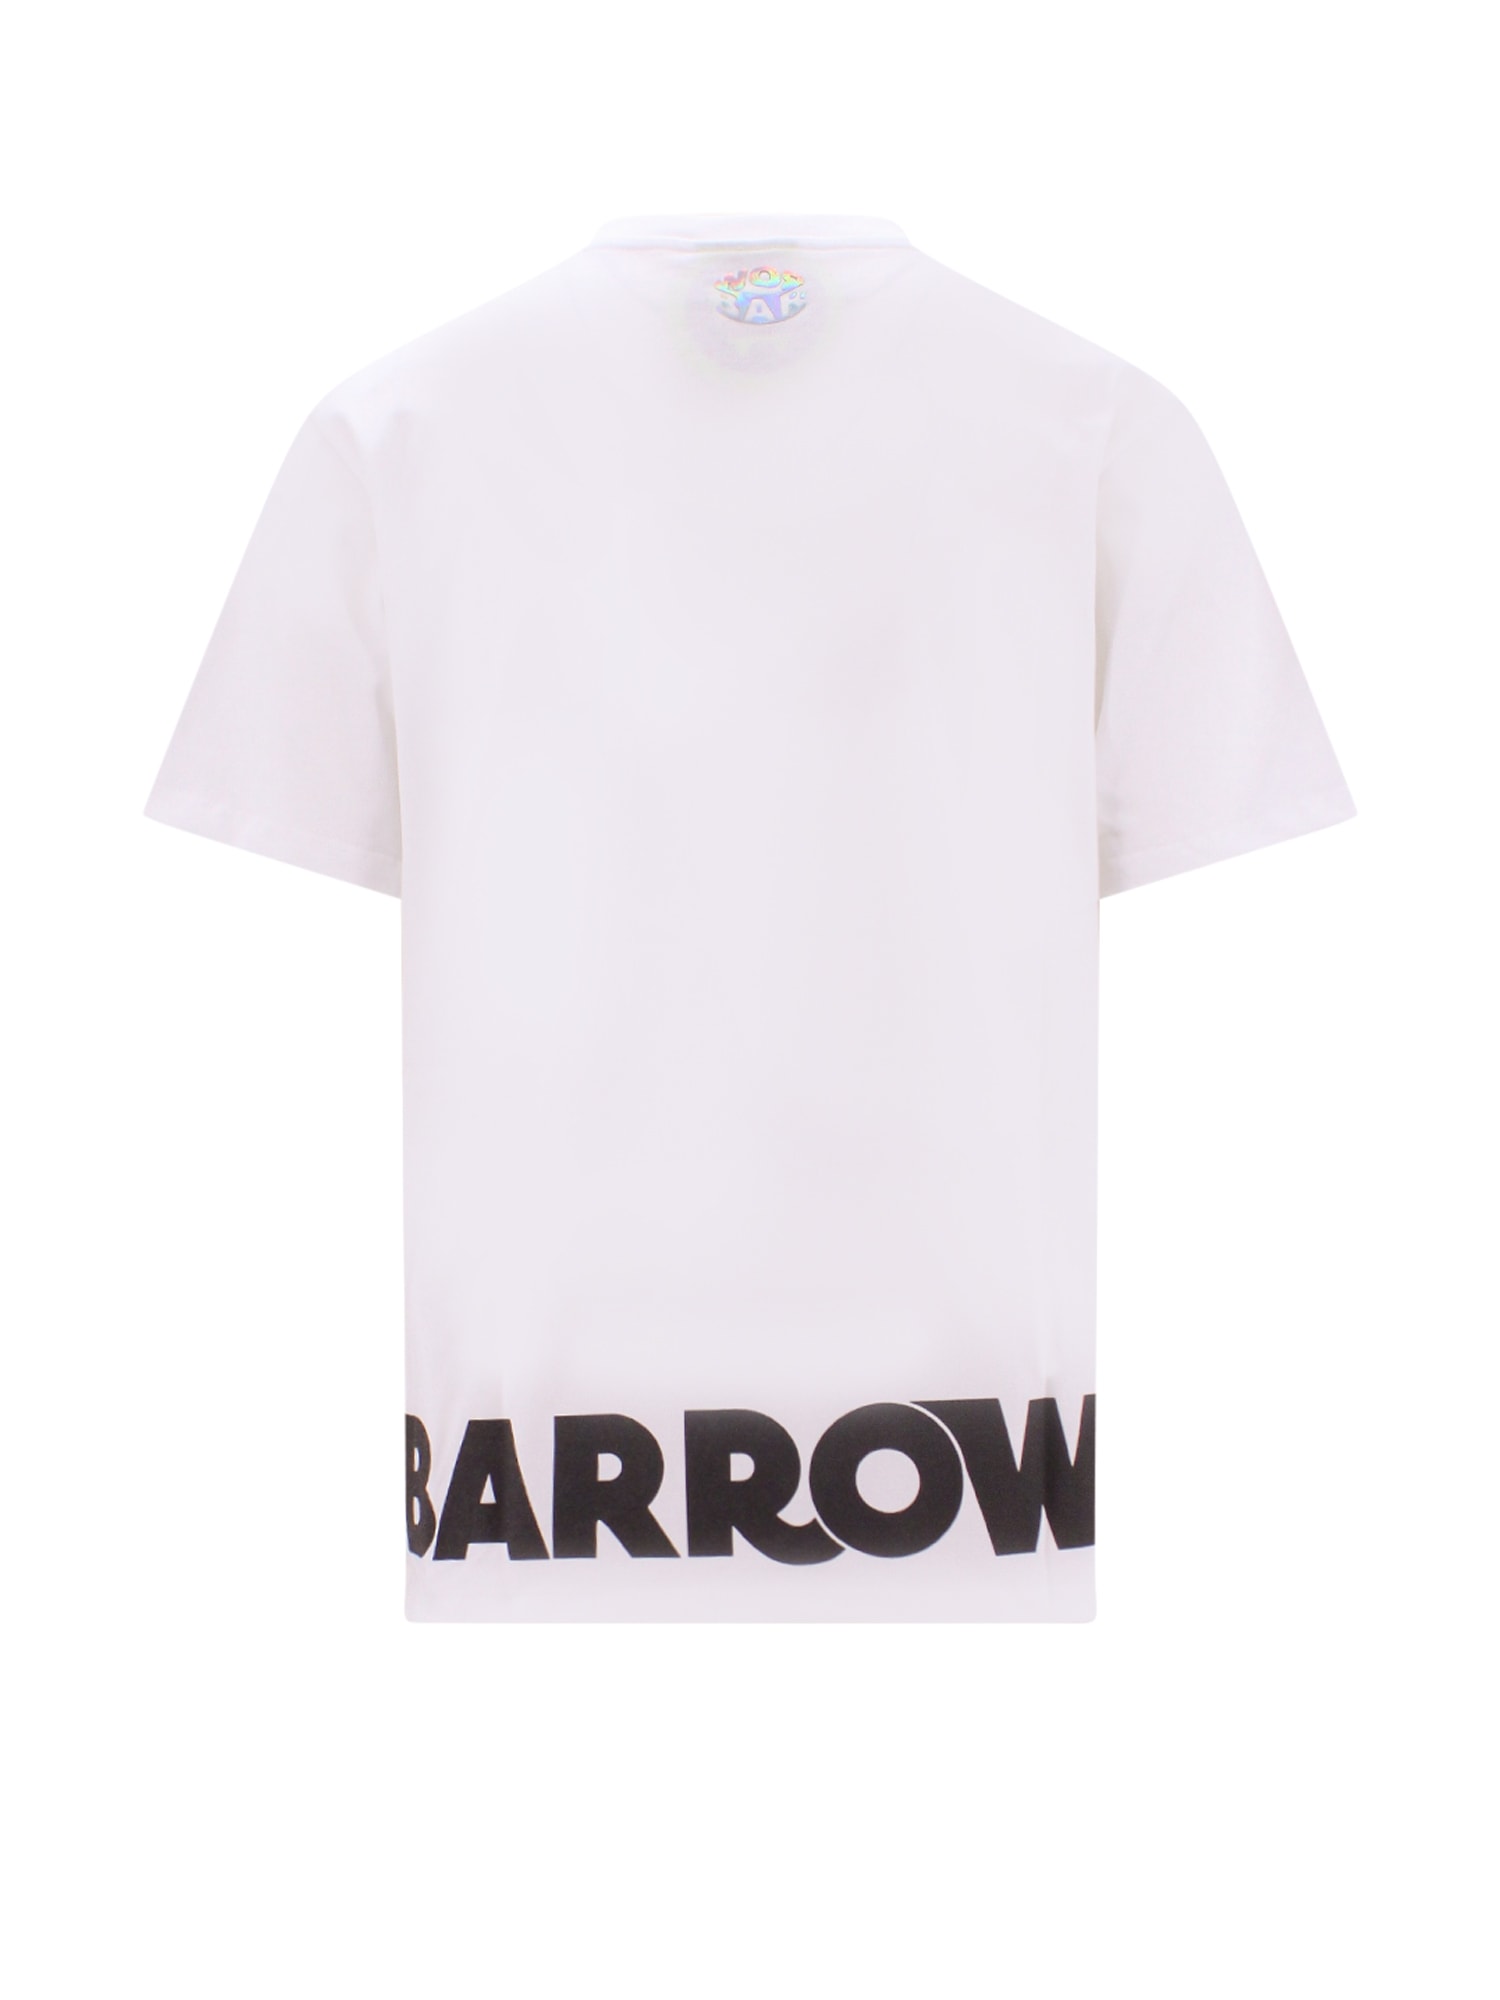 Barrow T-shirt Jersey Unisex White Cotton T-shirt With Flower